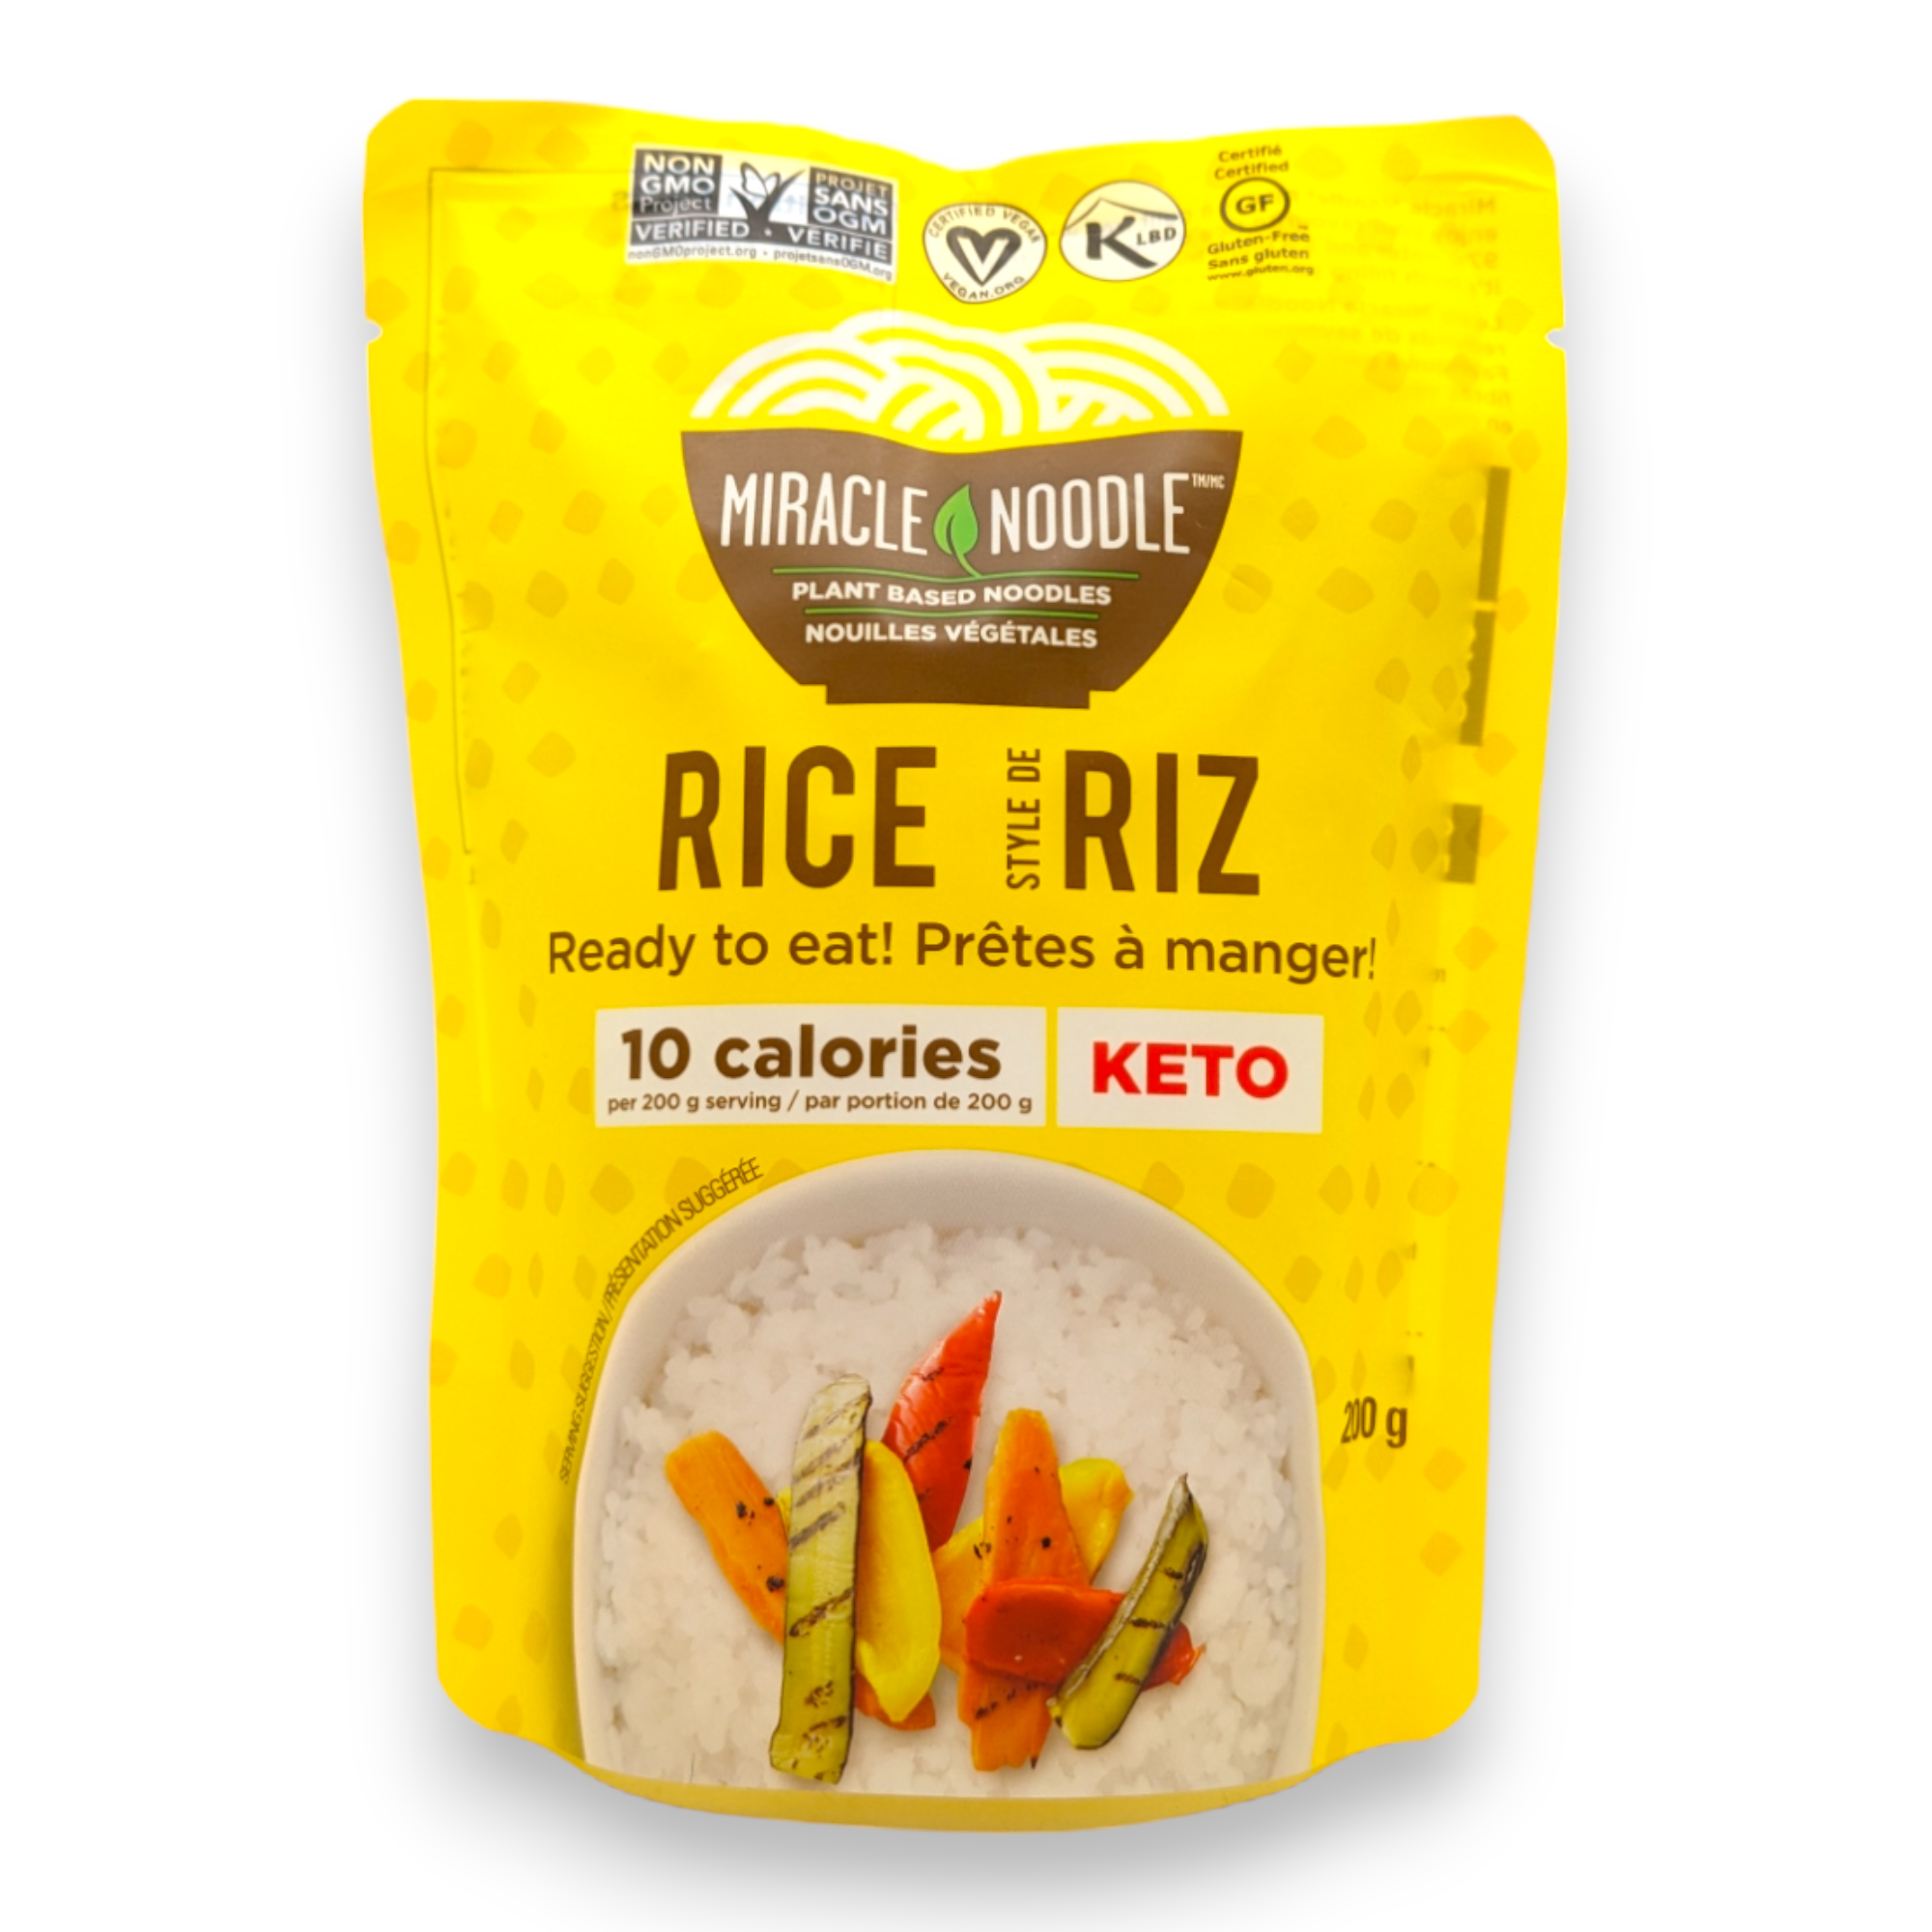 Riz - Miracle Noodle